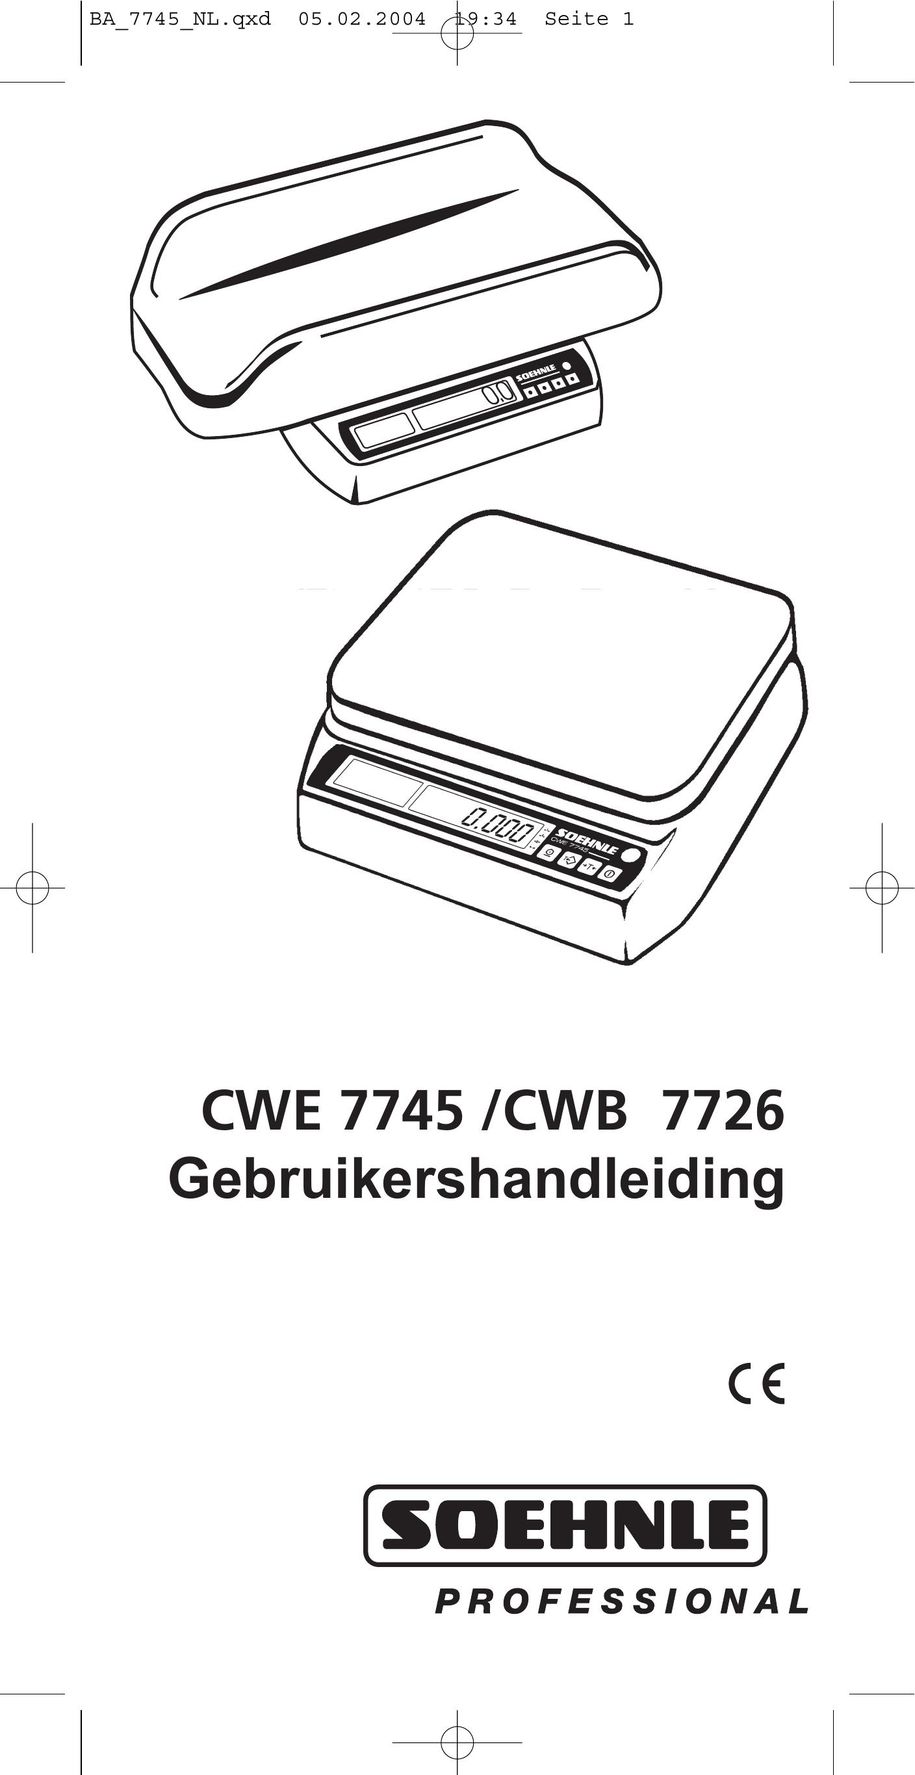 Soehnle CWB 7726 Postal Equipment User Manual